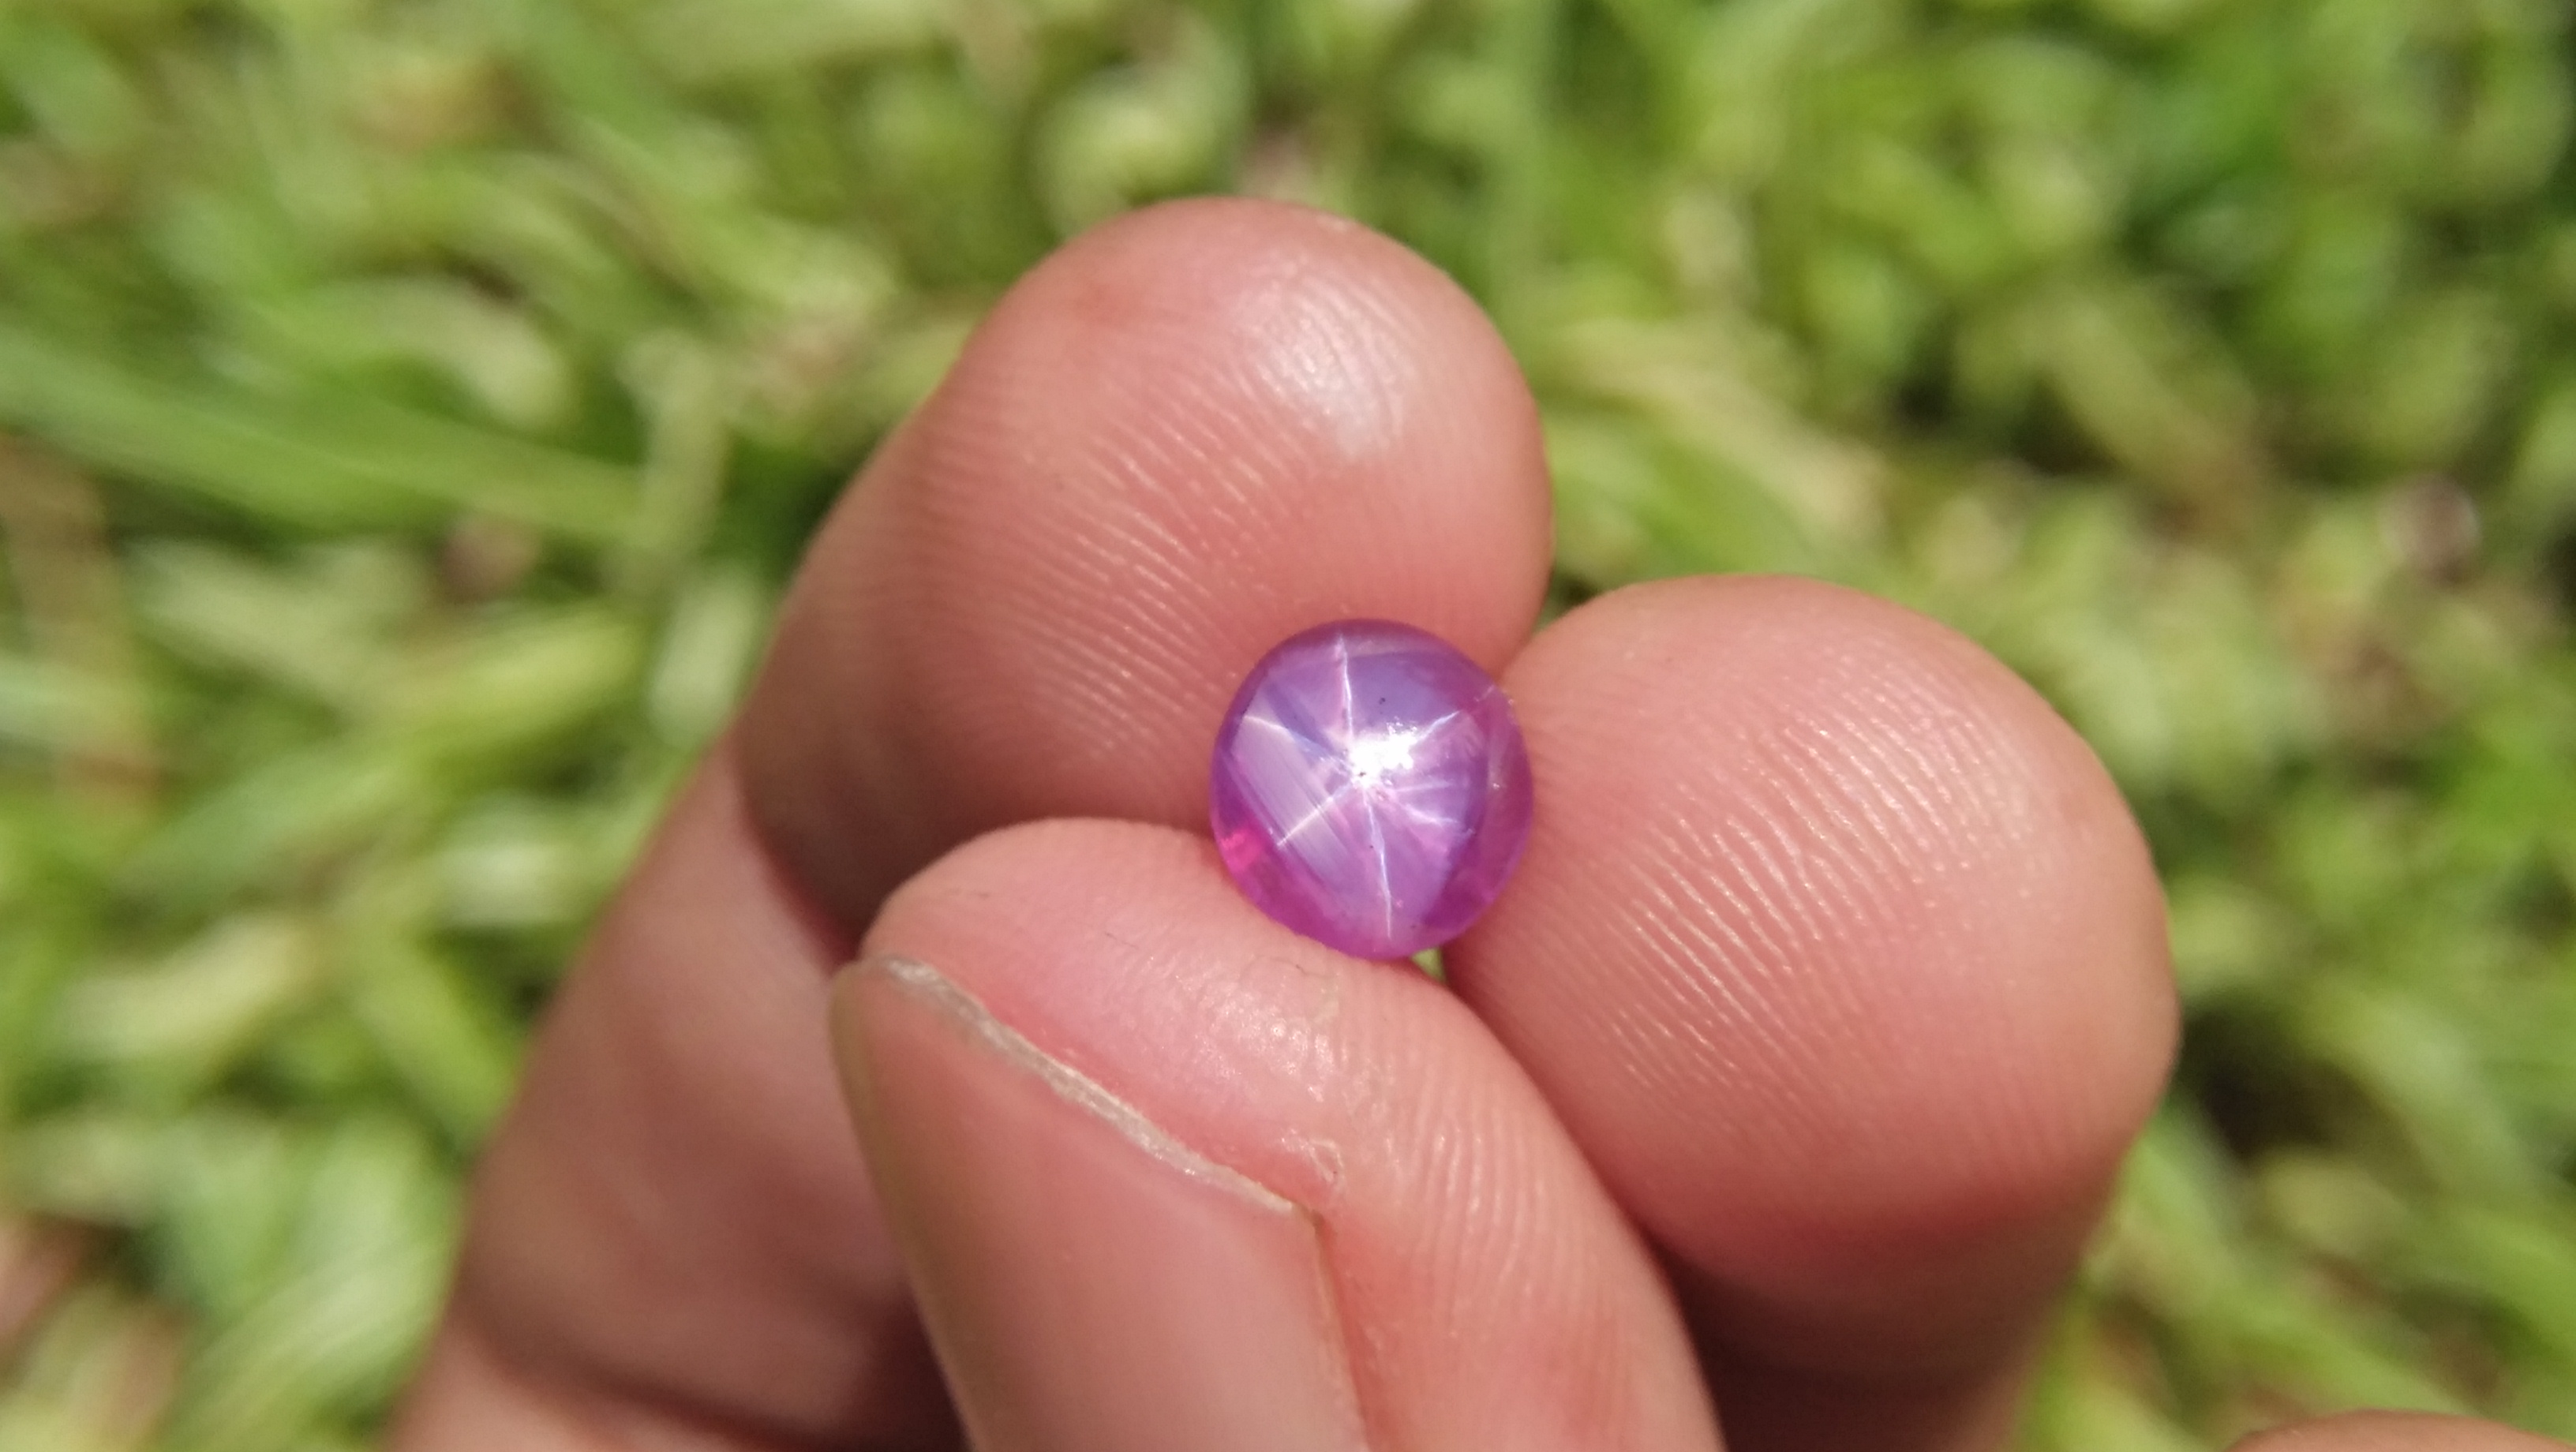 Ceylon Natural Star Pink Sapphire Dimension -: 6.5mm x 6.7mm x 5.30mm Weight -: 2.45Cts Mineral -: Ratnapura, Sri Lanka Treatment -: Unheated/Natural Colour -: Pink Clarity -: SI Clarity